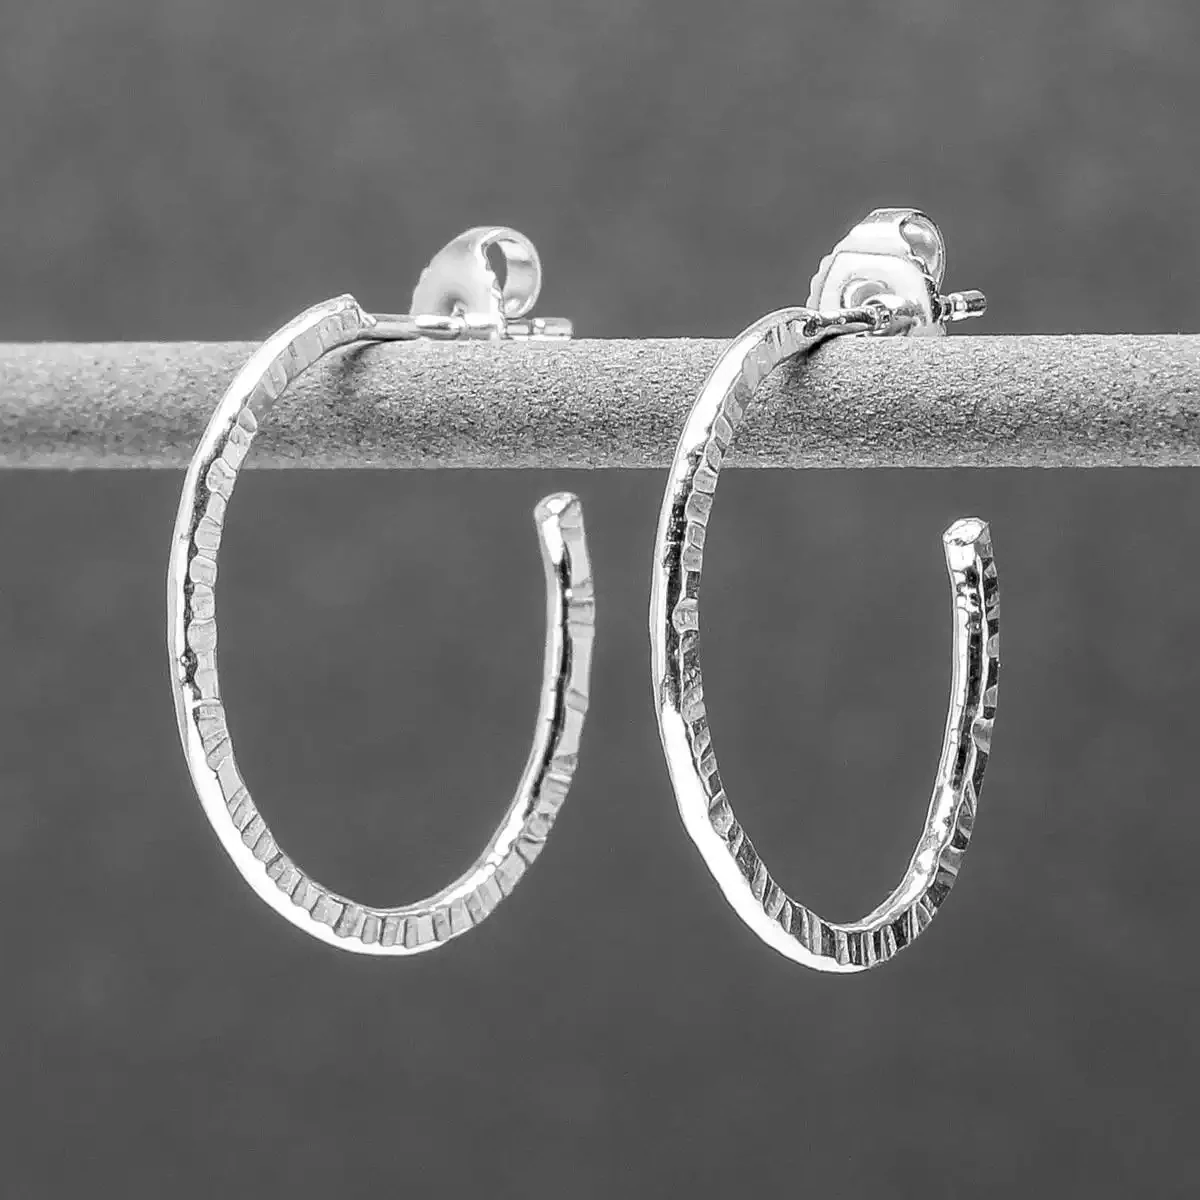 Oval Silver Hoop Earrings - Small by Tara Kirkpatrick